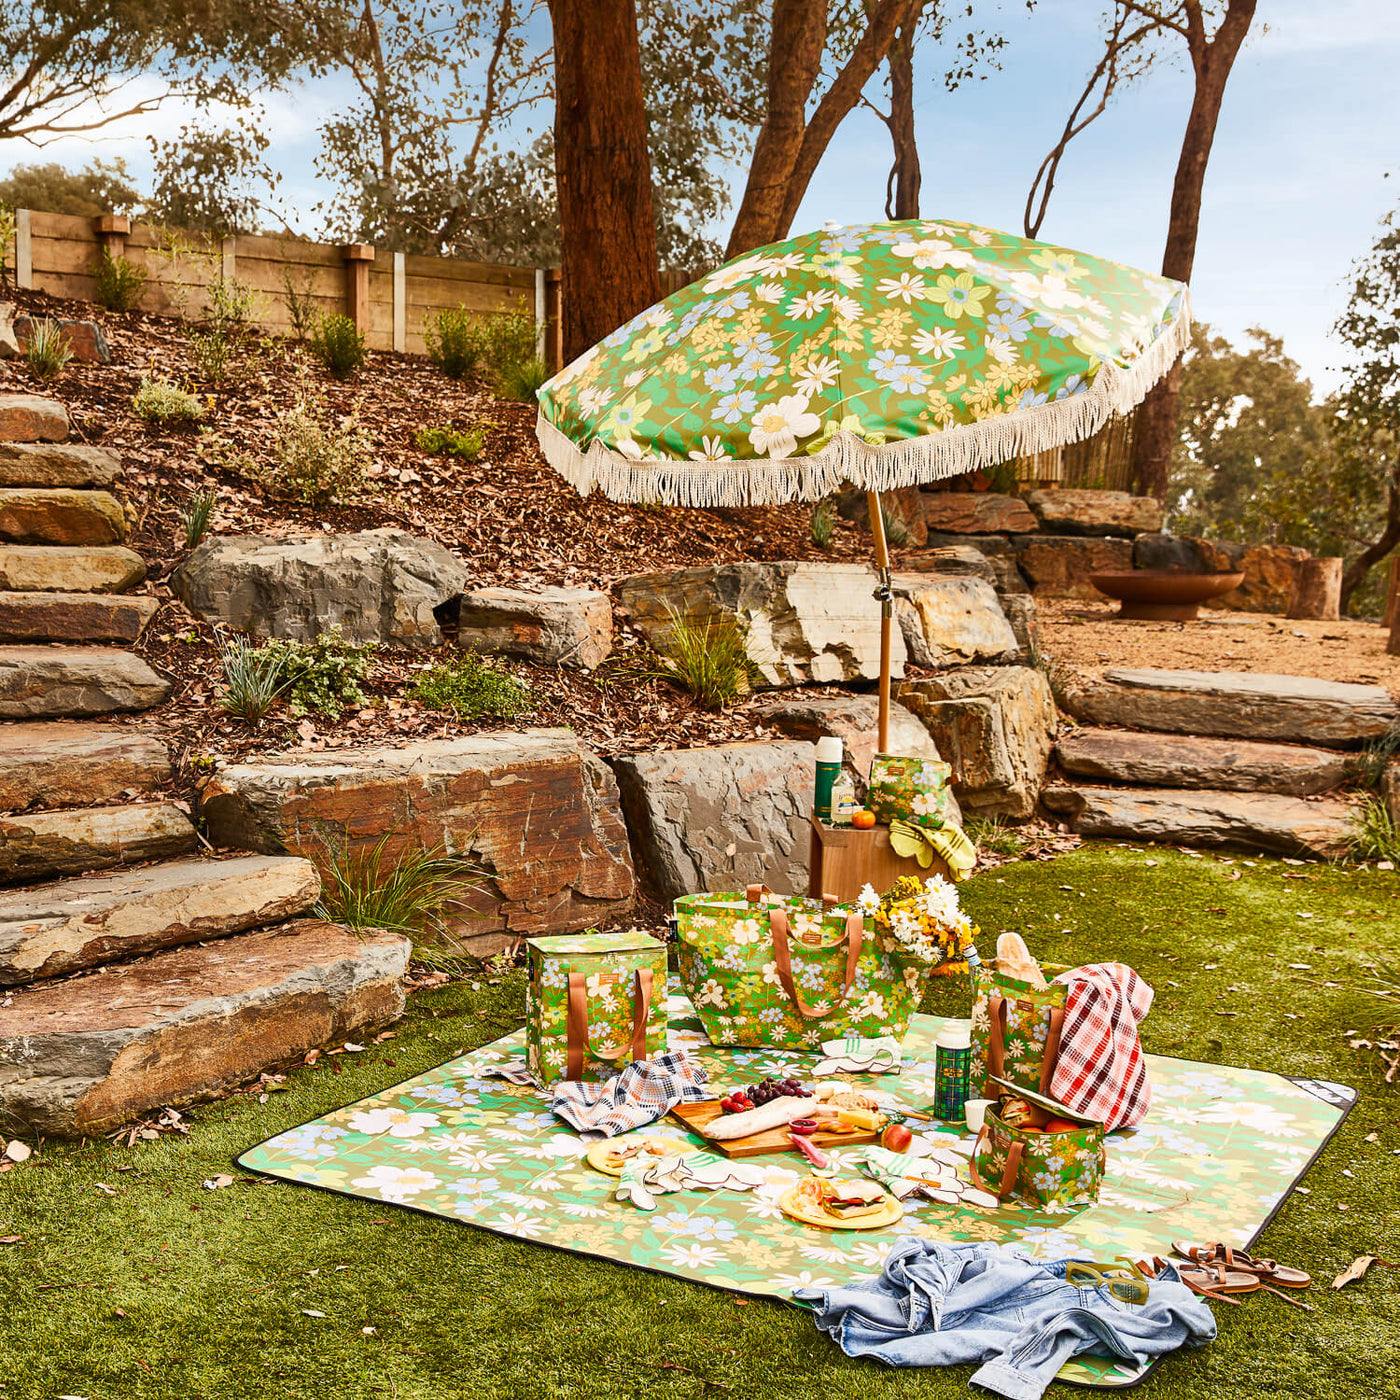 rocky-landscape-design-green-lawn-picnic-setup-umbrella-rug-food